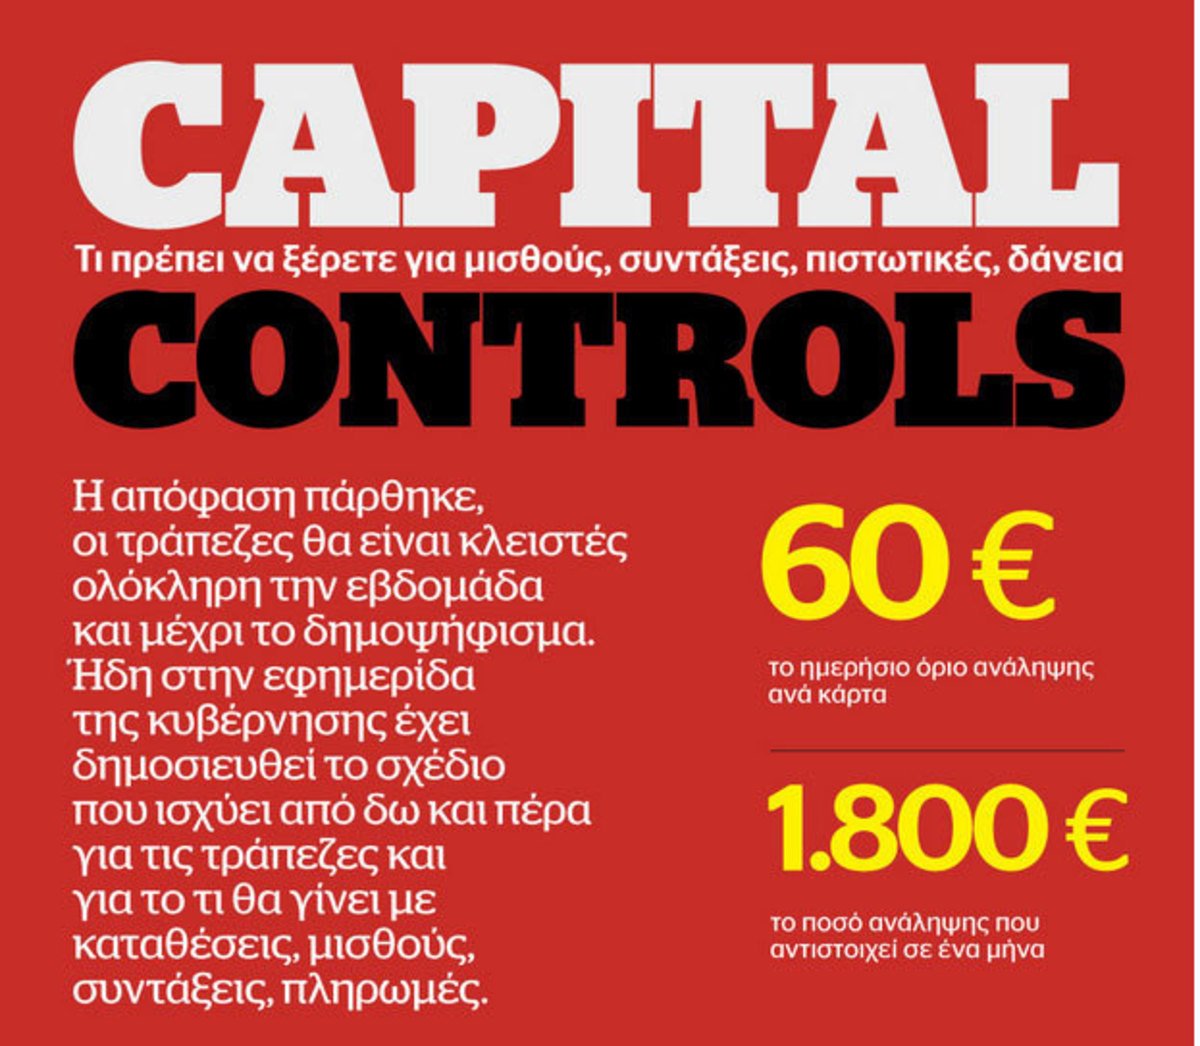 Infographic – Capital Control: Όλες οι ερωτήσεις και απαντήσεις!